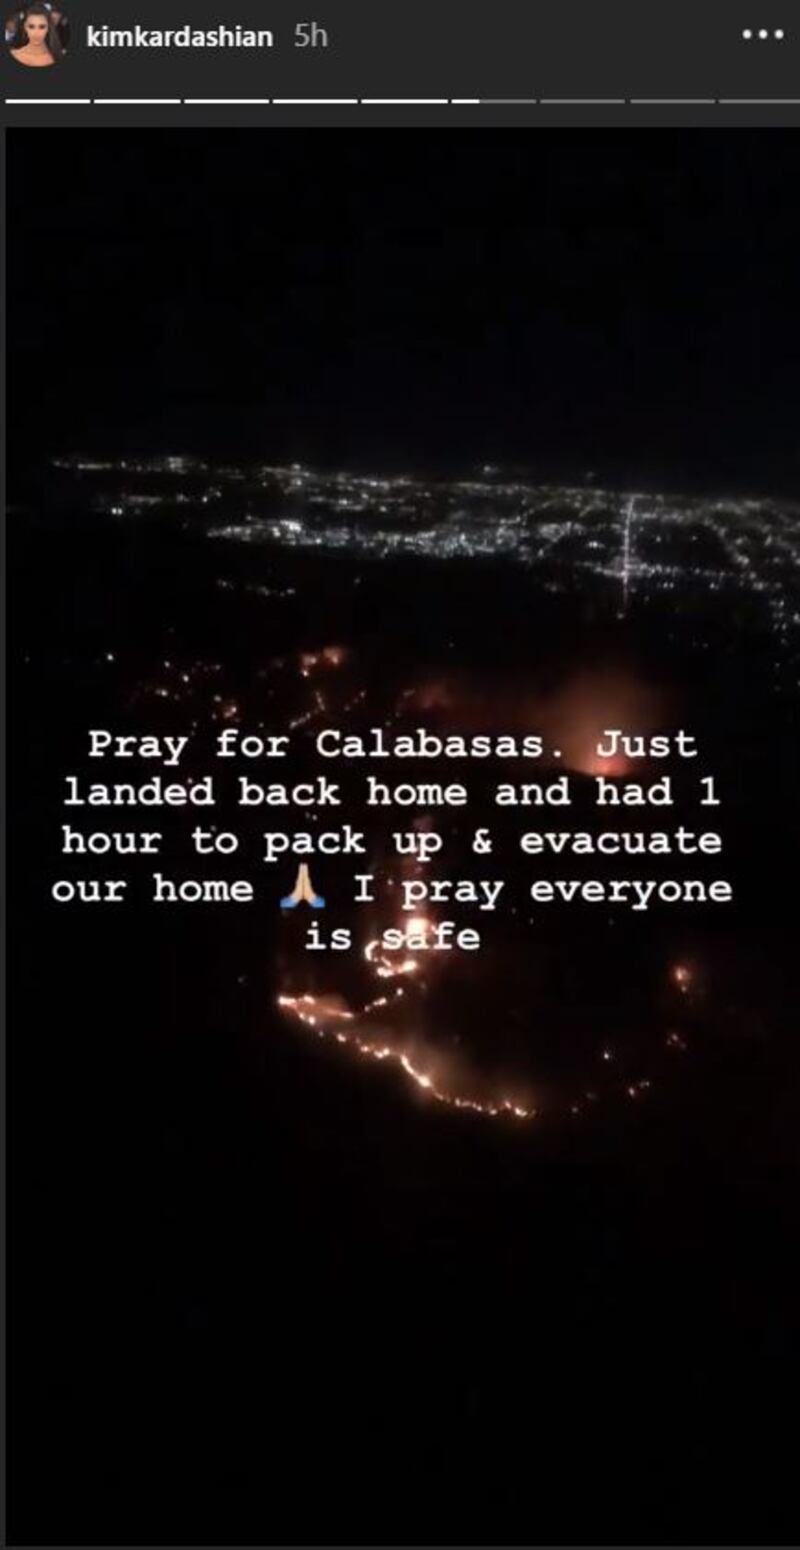 Kim Kardashian posted on Instagram: "Pray for Calabasas." (@kimkardashian/Instagram)